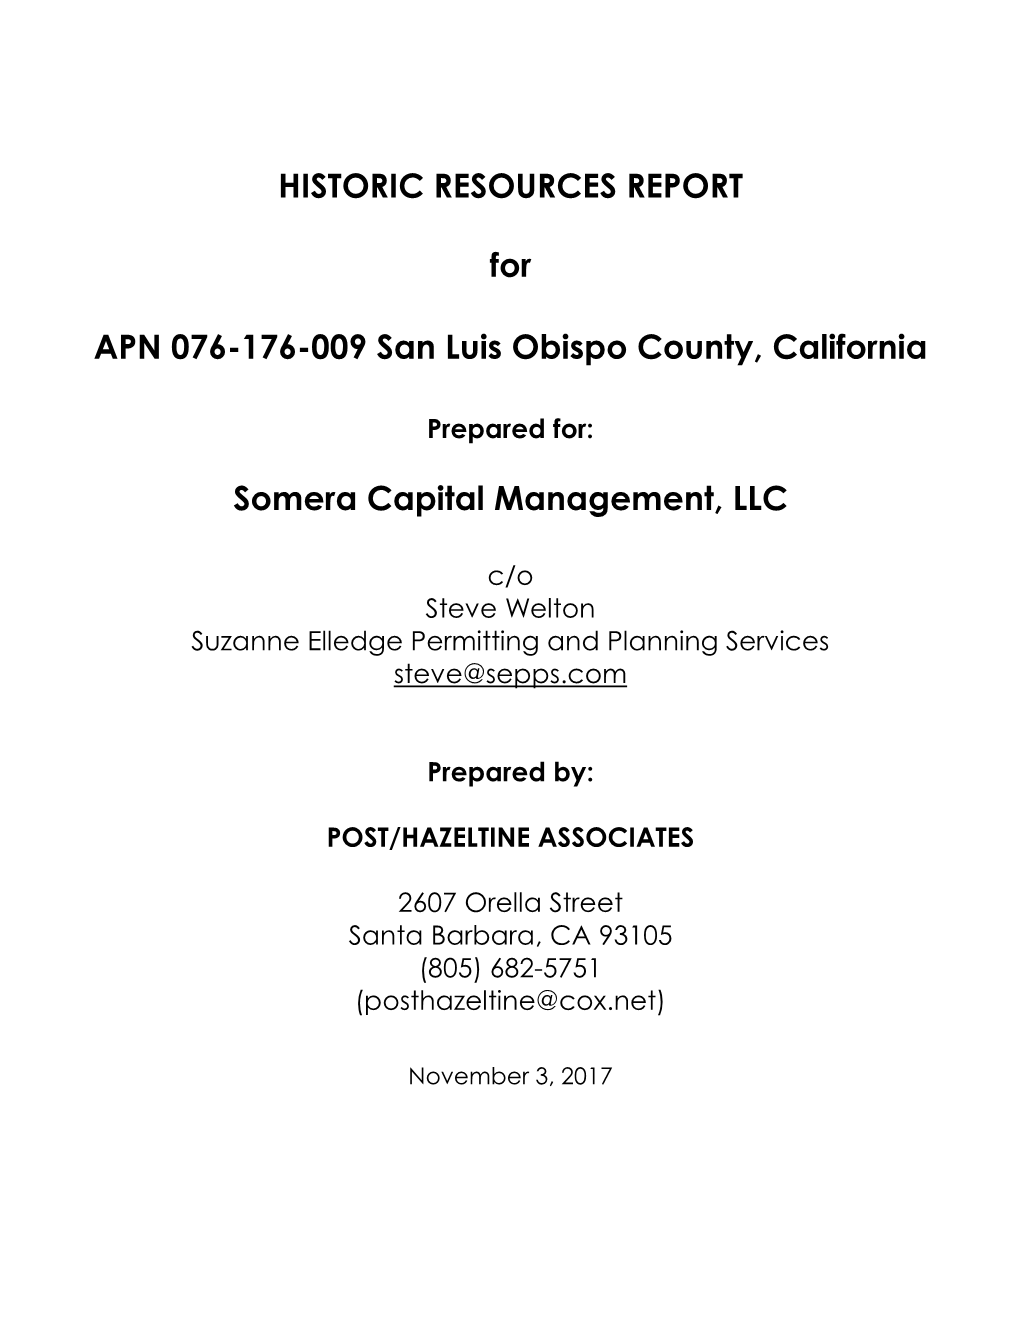 HISTORIC RESOURCES REPORT for APN 076-176-009 San Luis Obispo